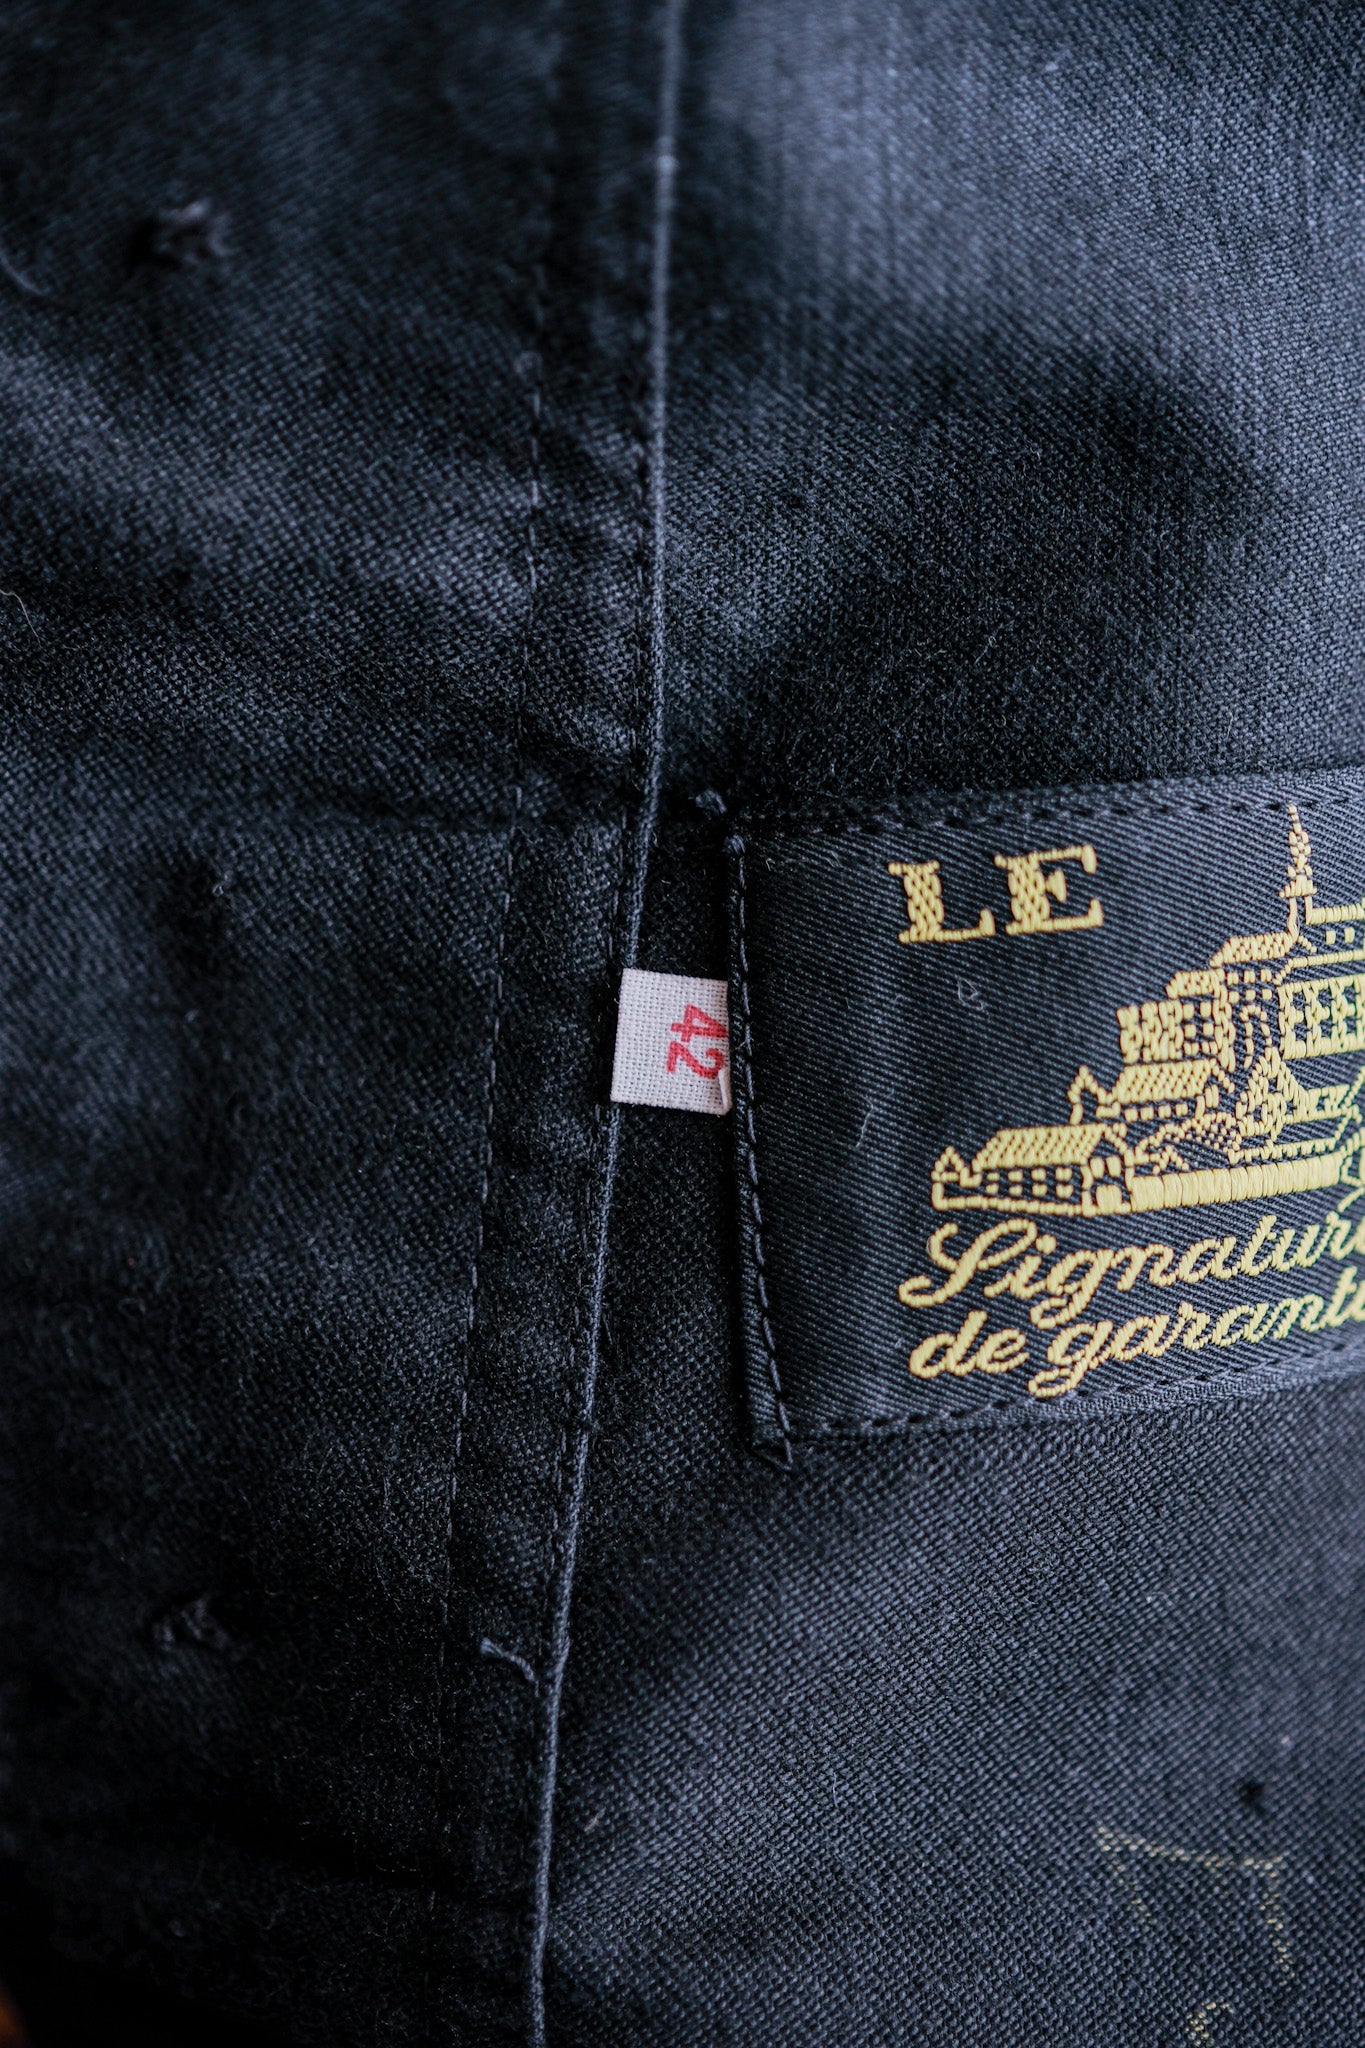 [〜50年代]法國復古黑色摩爾金鞋夾克尺寸。42“ le mont St. Michel”“ Dead Stock”